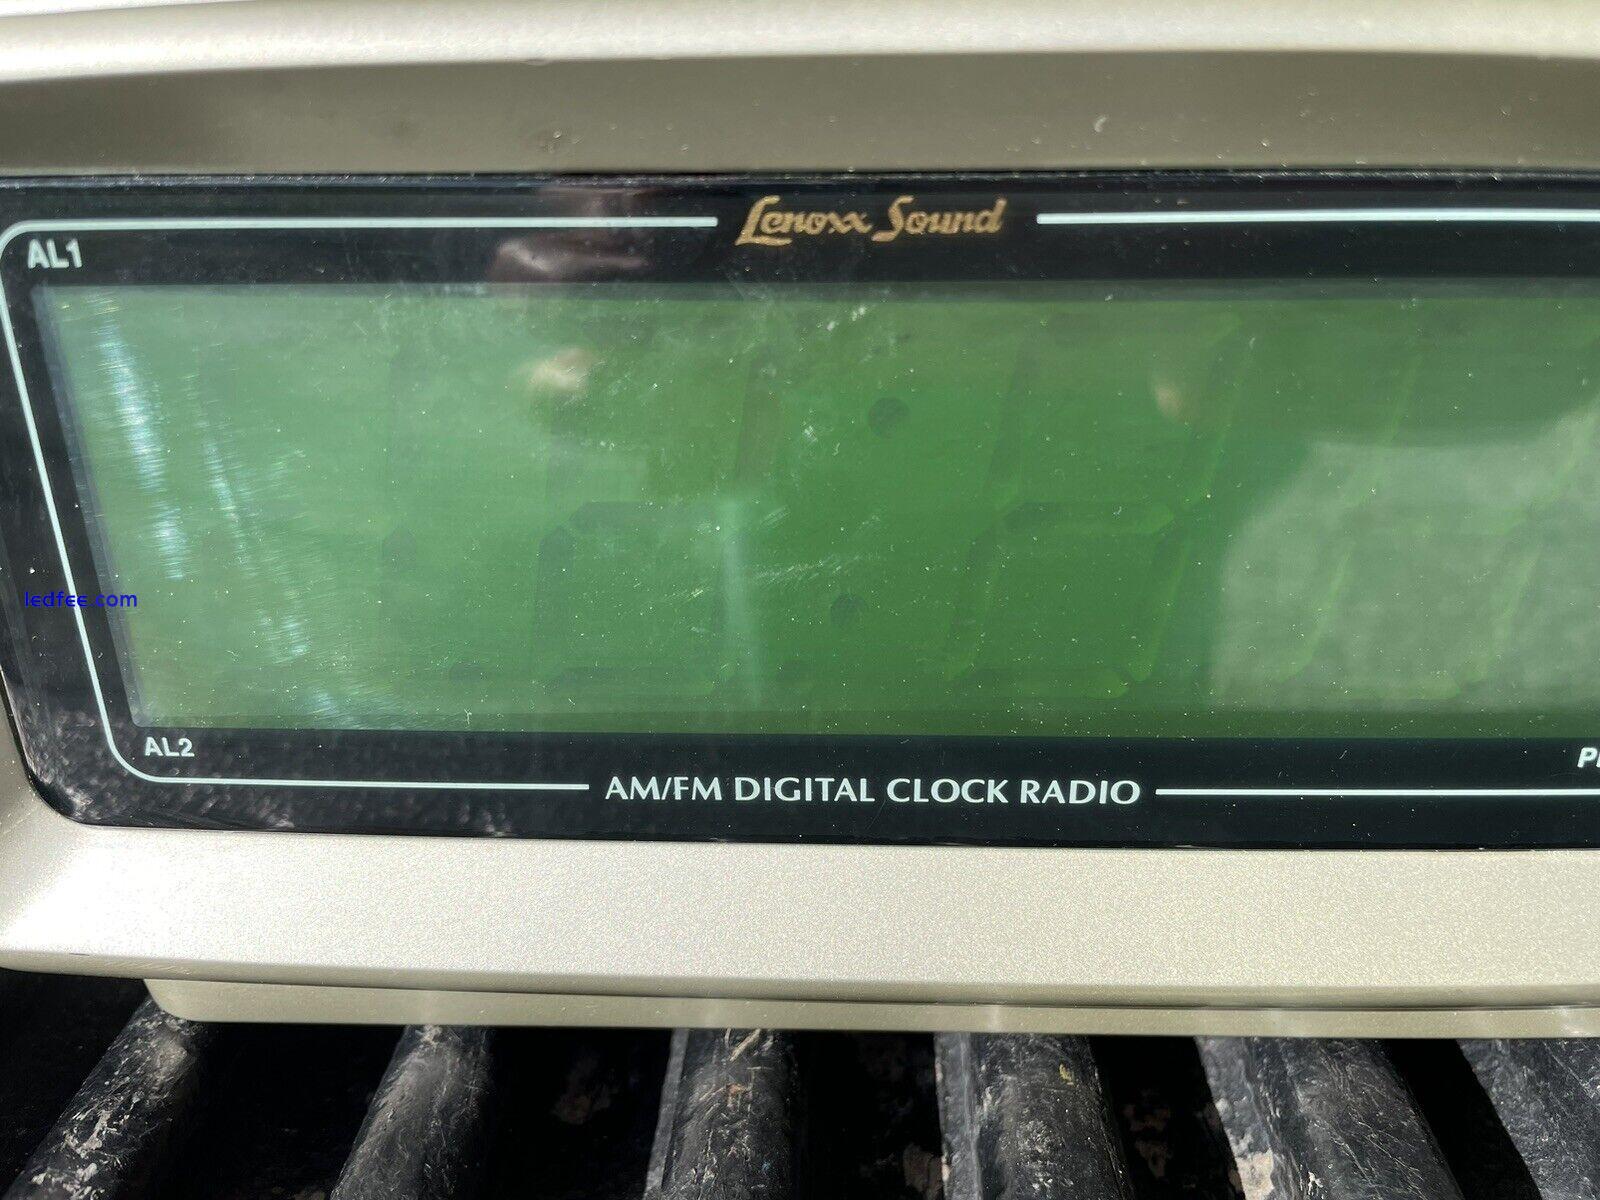 Lenoxx Sound Alarm Clock Radio CR-776 AM/FM Large LED Display Used Works! 1 